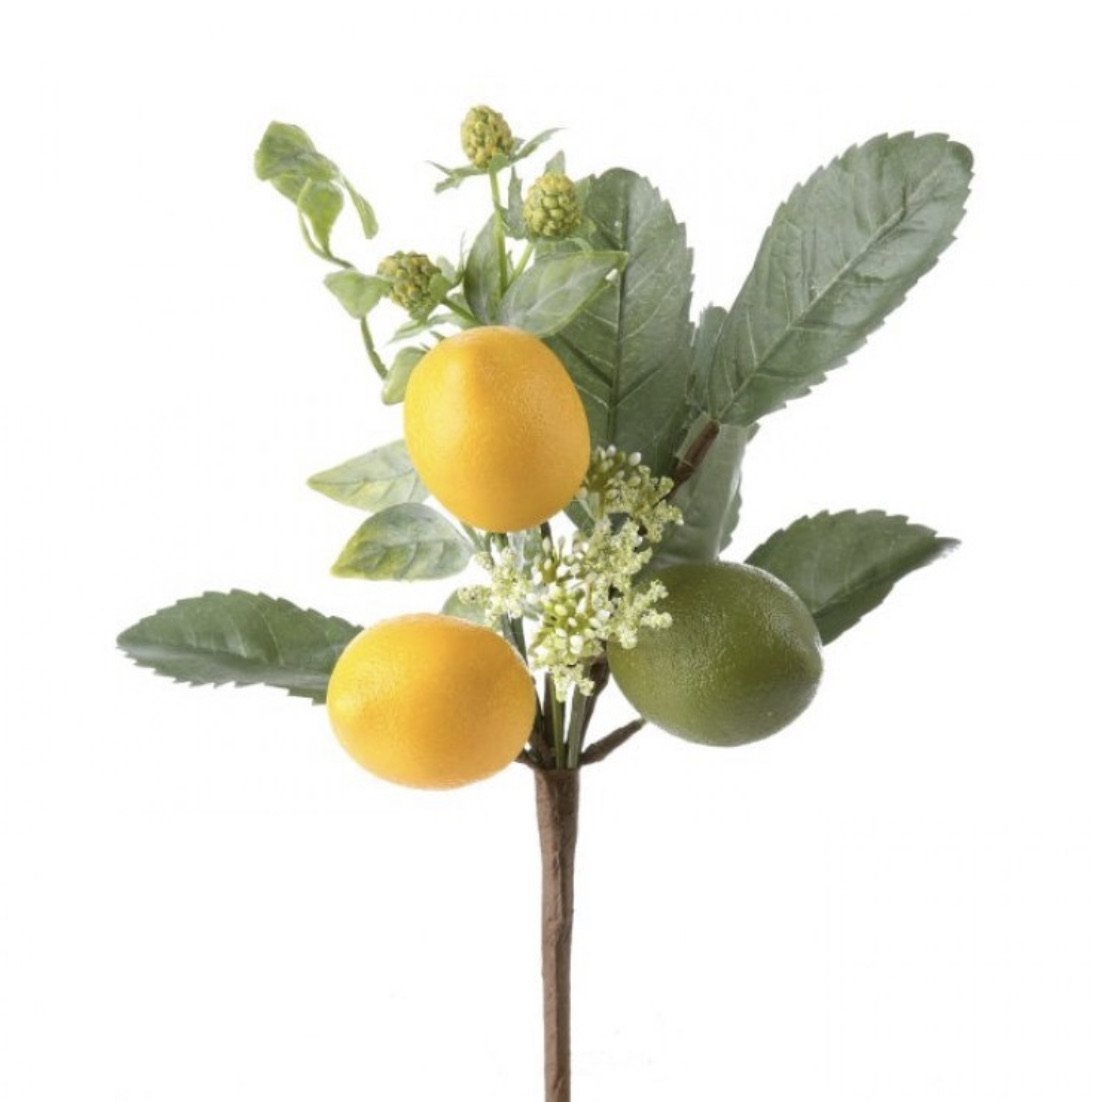 Lemon and lime with greenery pick - Greenery MarketgreeneryMTF22857